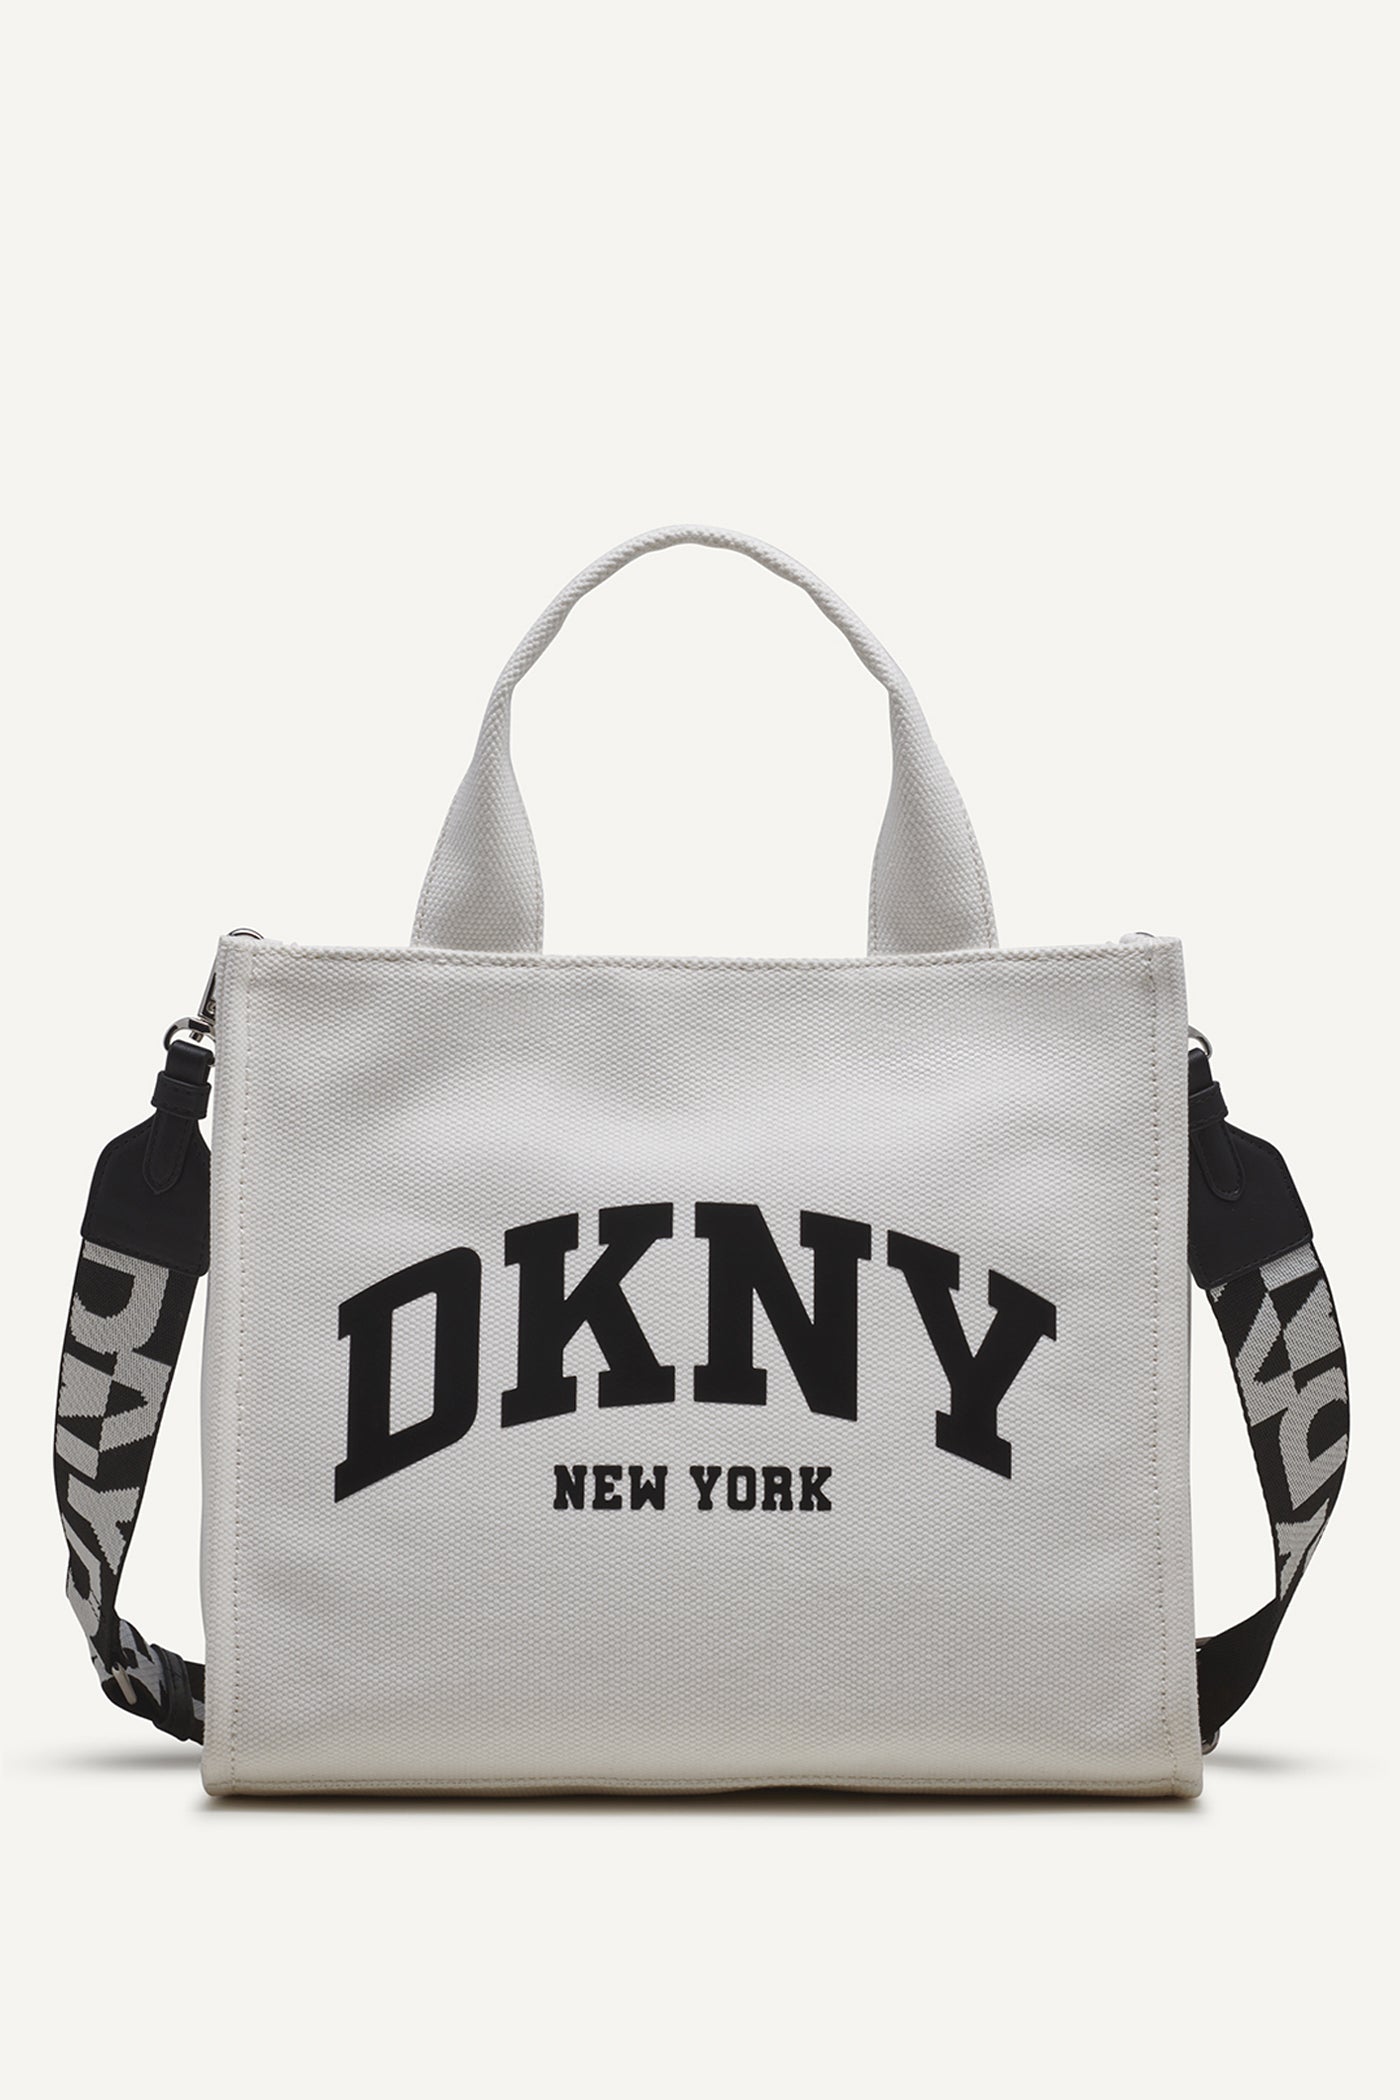 SALE BAGS | DKNY